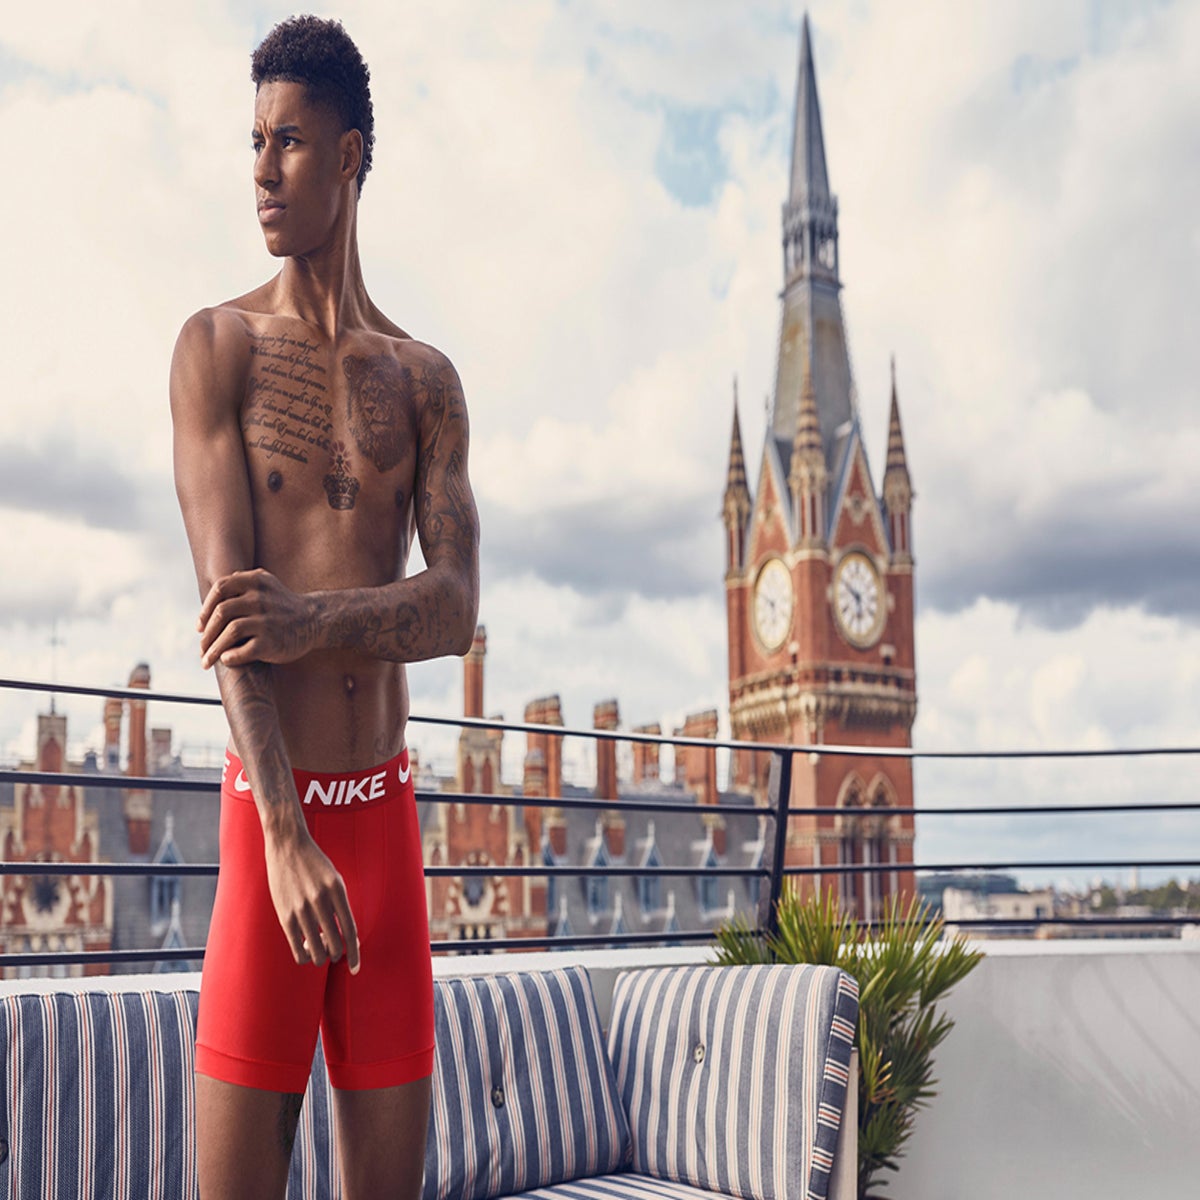 Marcus Rashford reveals impressive muscles as he launches Nike underwear  line